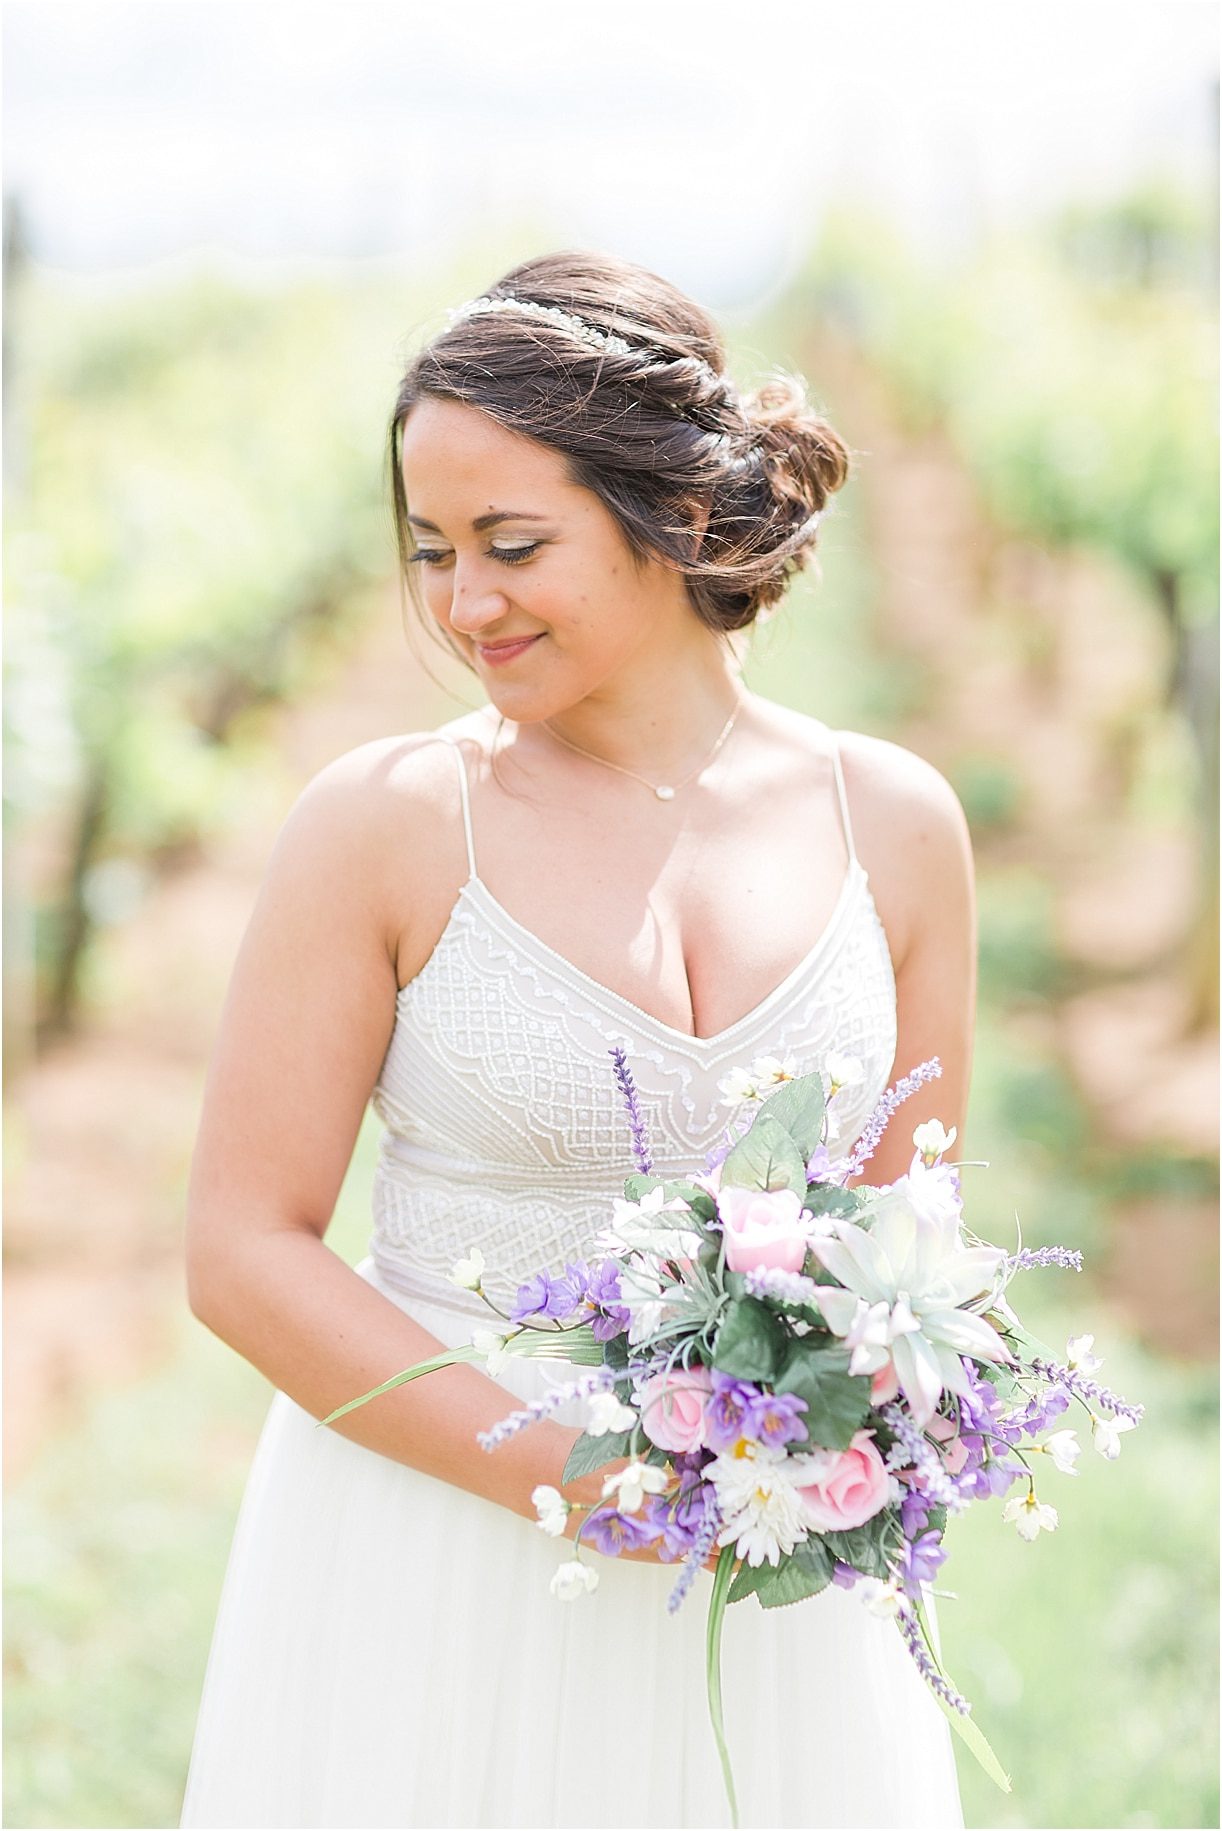 Spring Vineyard Wedding | Hill City Bride Virginia Wedding Blog - Jessica Green Photography - bride, bouquet